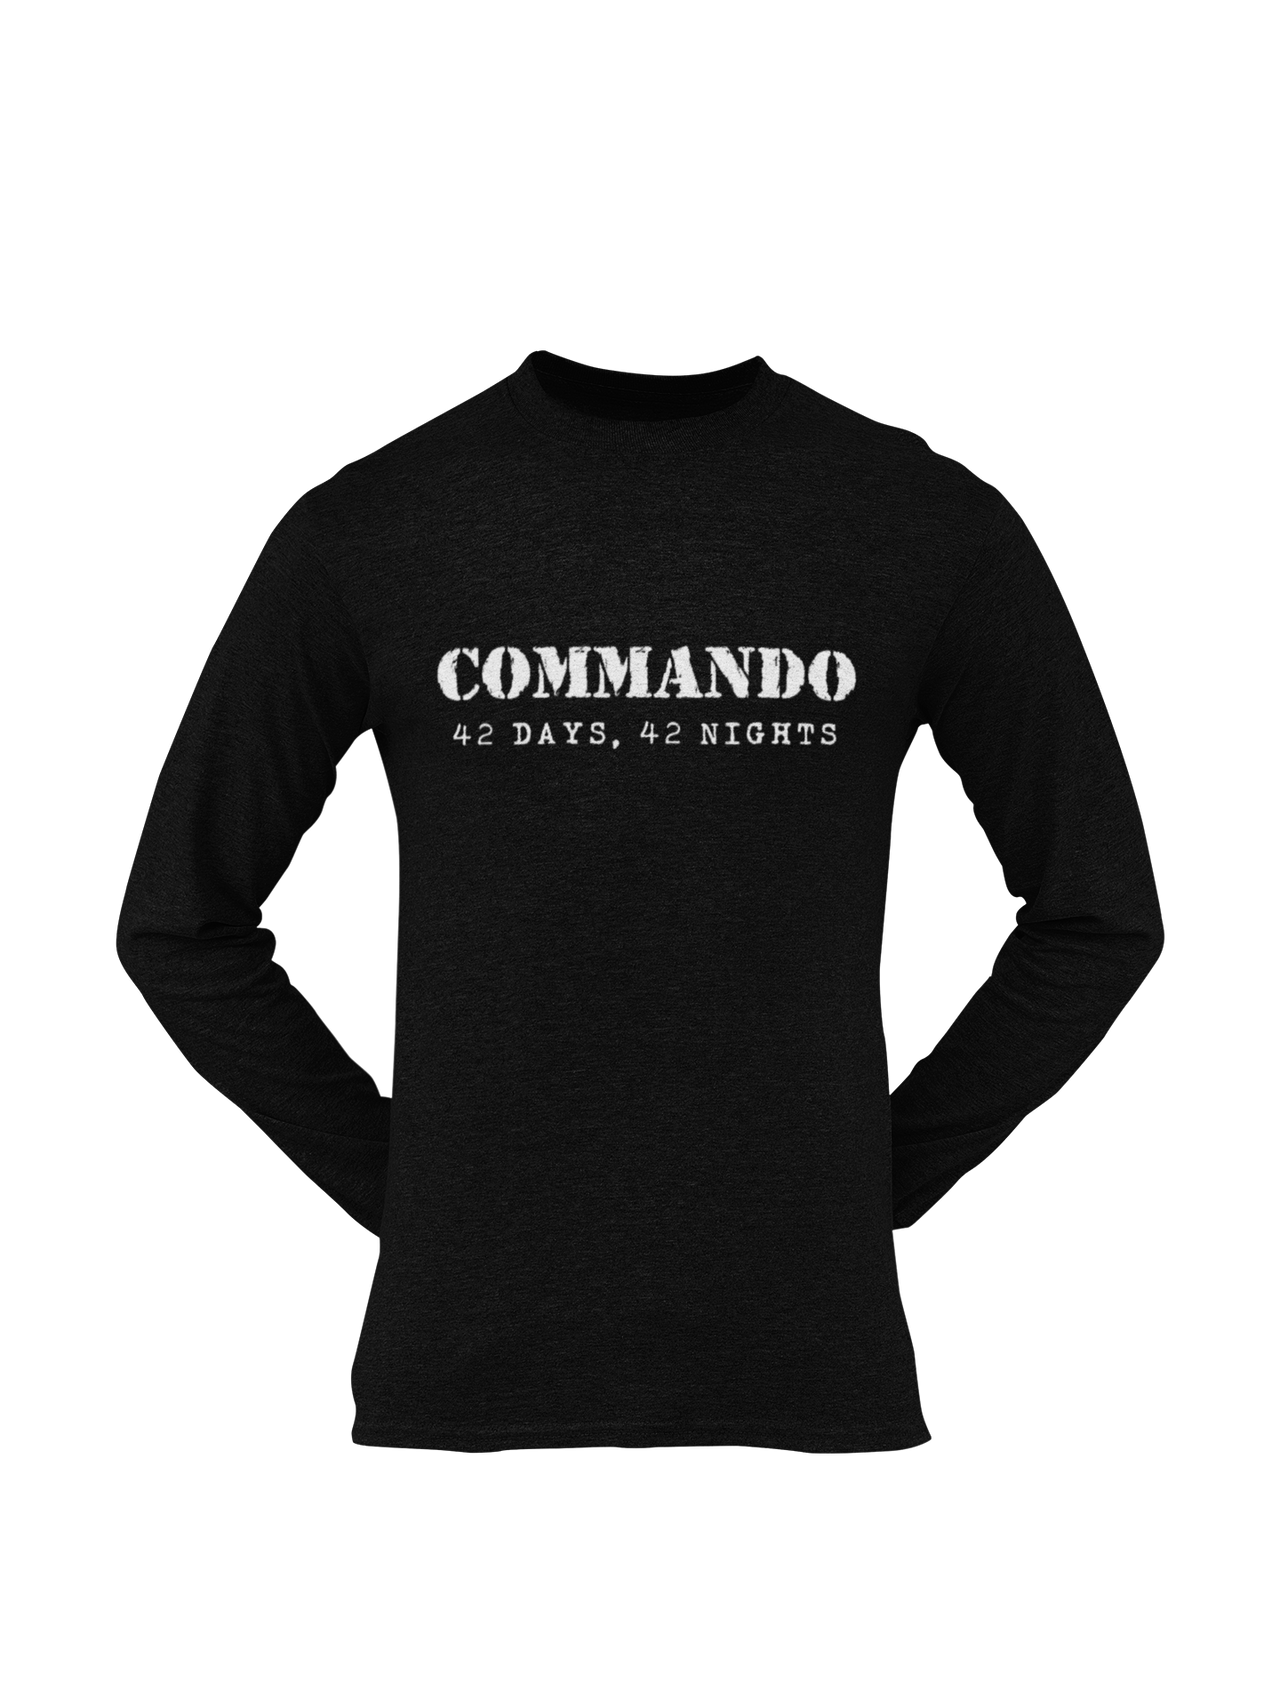 Commando T-shirt - Commando - 42 Days 42 Nights (Men)